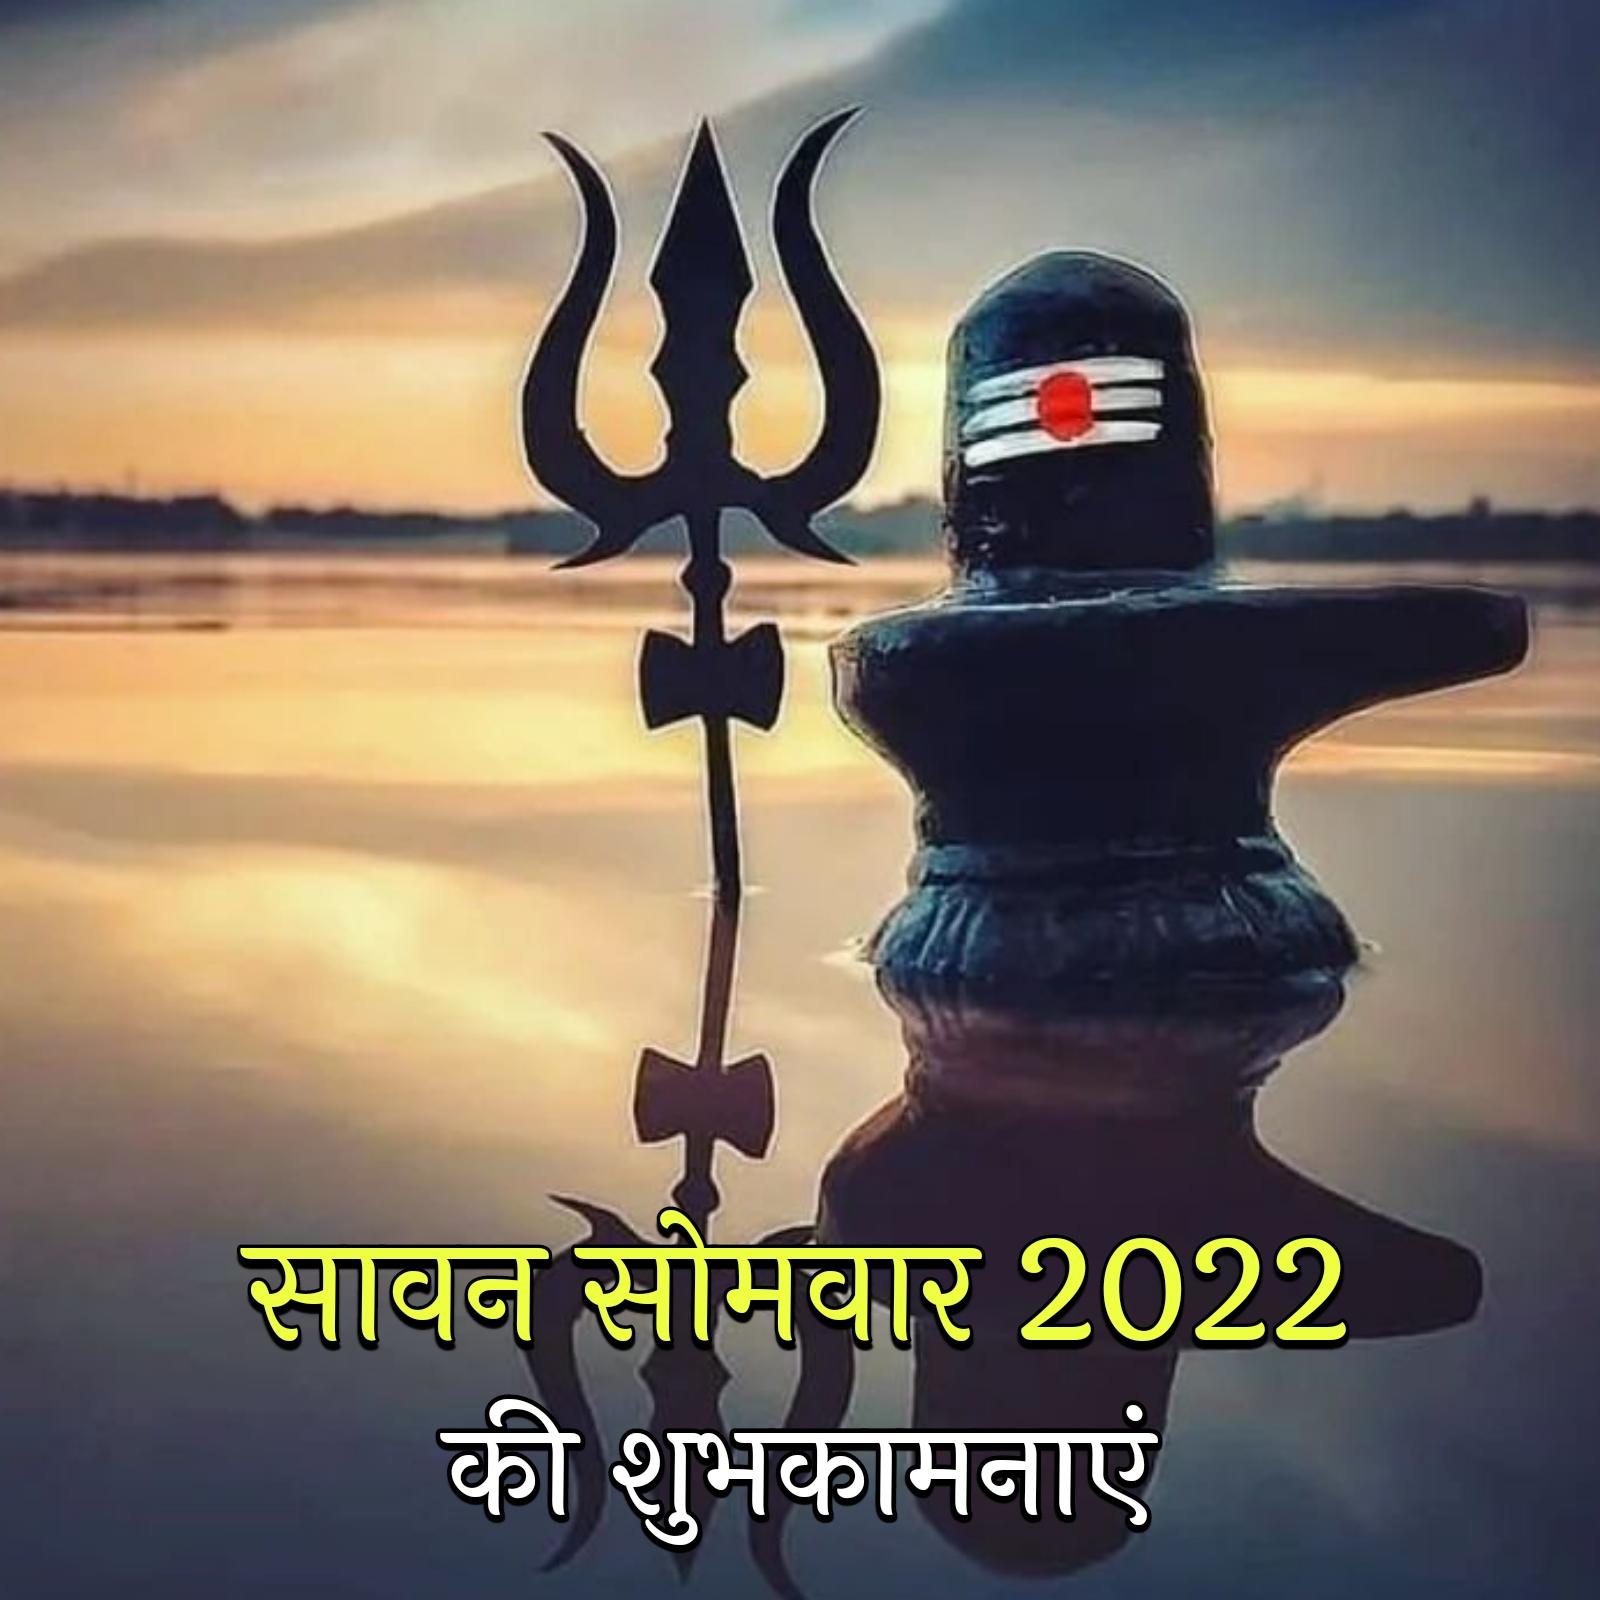 Sawan Somvar 2022 Ki Hardik Shubhkamnaye Photo